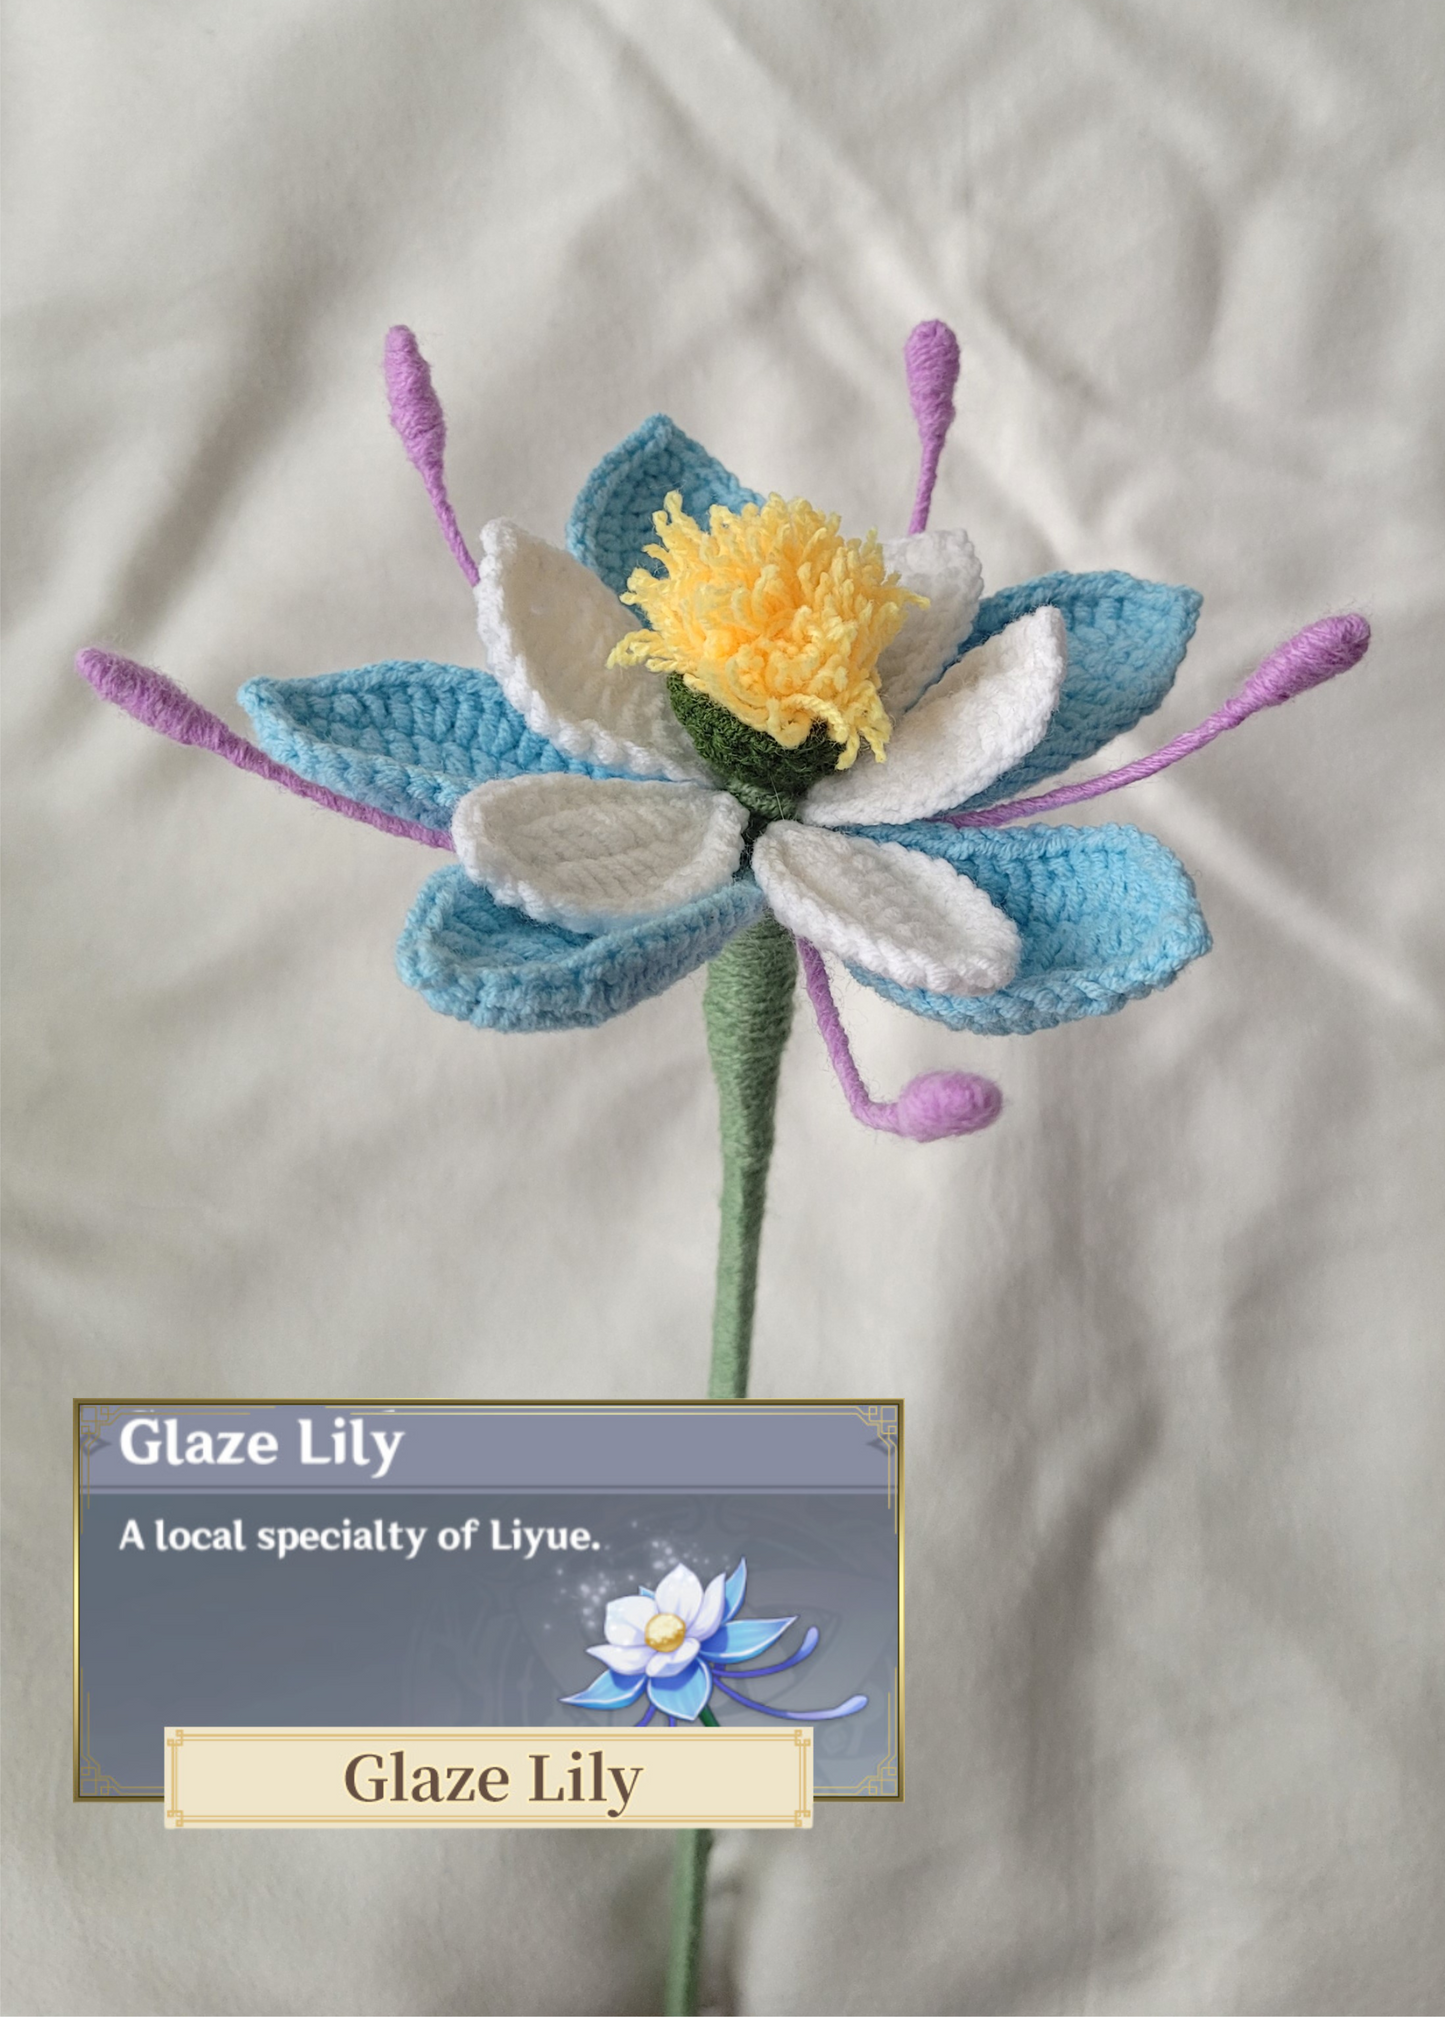 GI: Glaze Lily